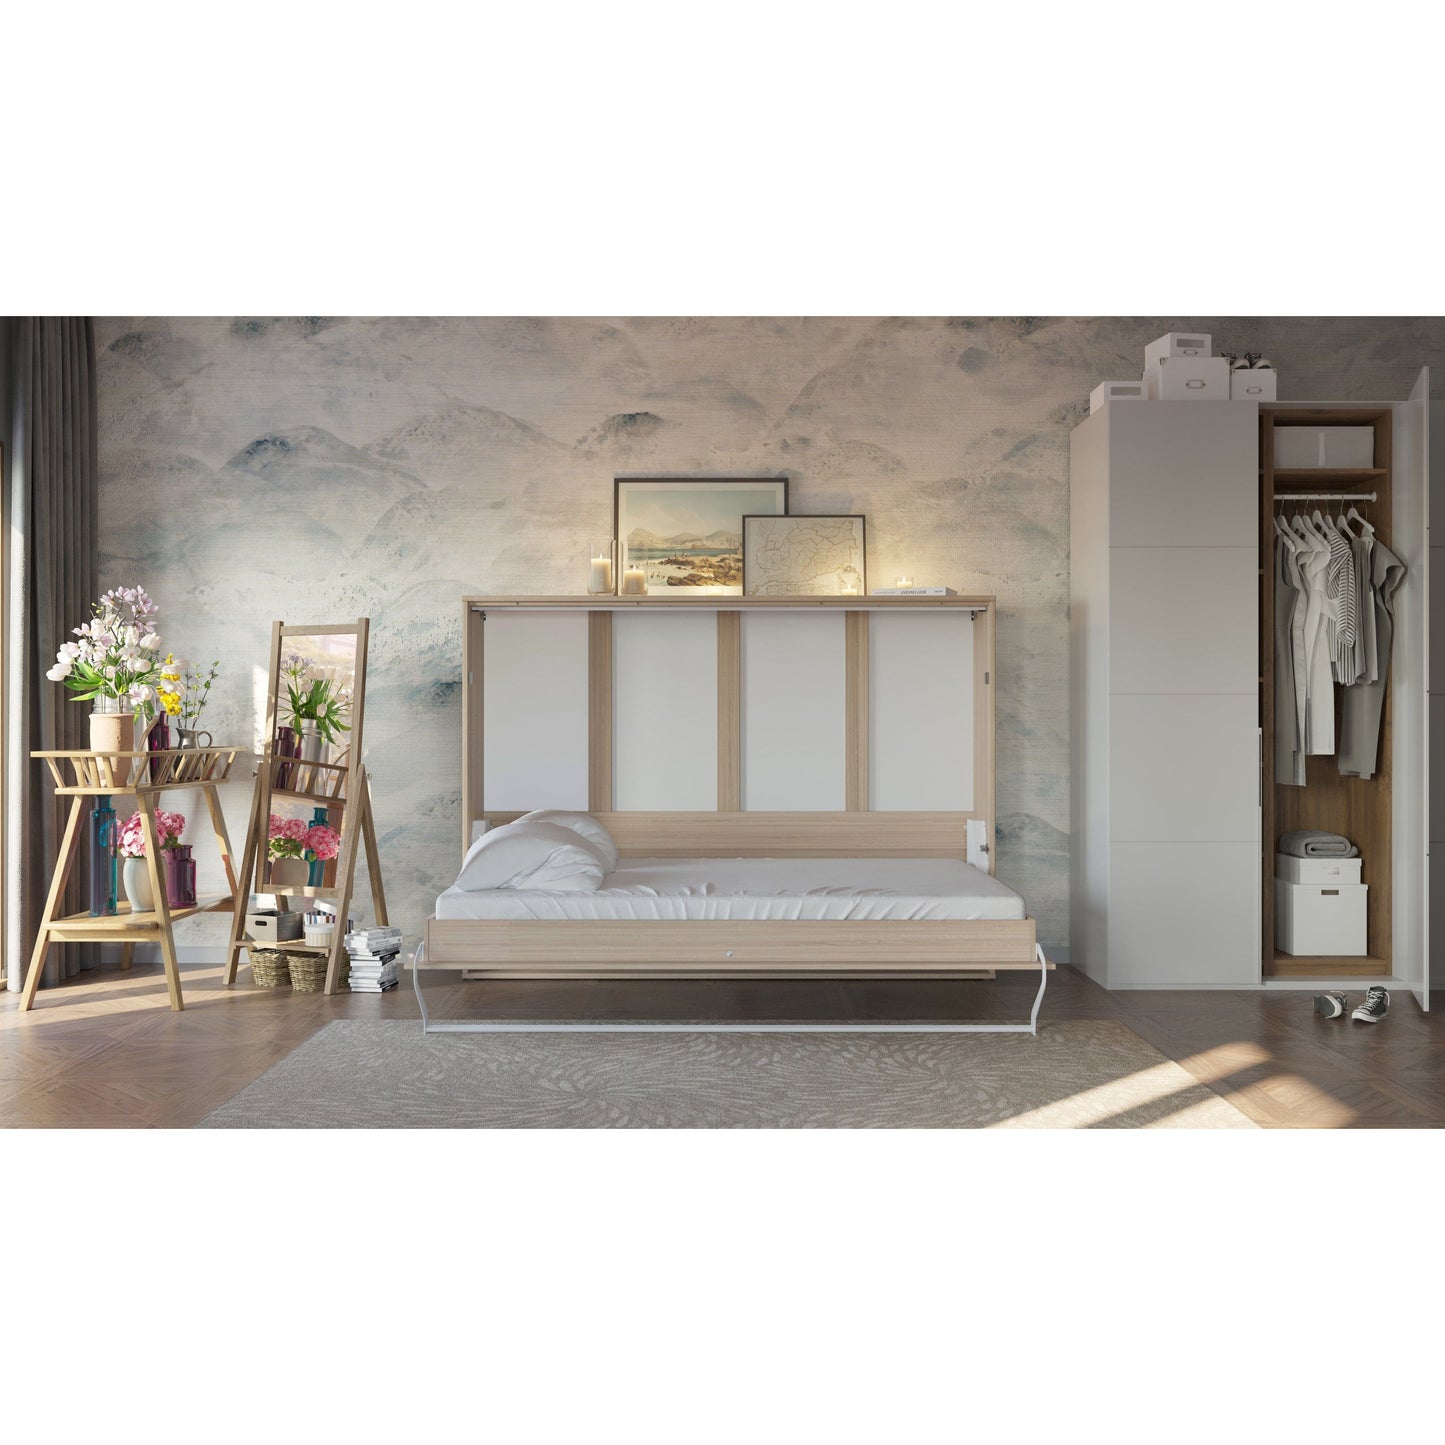 Maxima House European Full Size Horizontal Murphy Bed BRESCIA with mattress